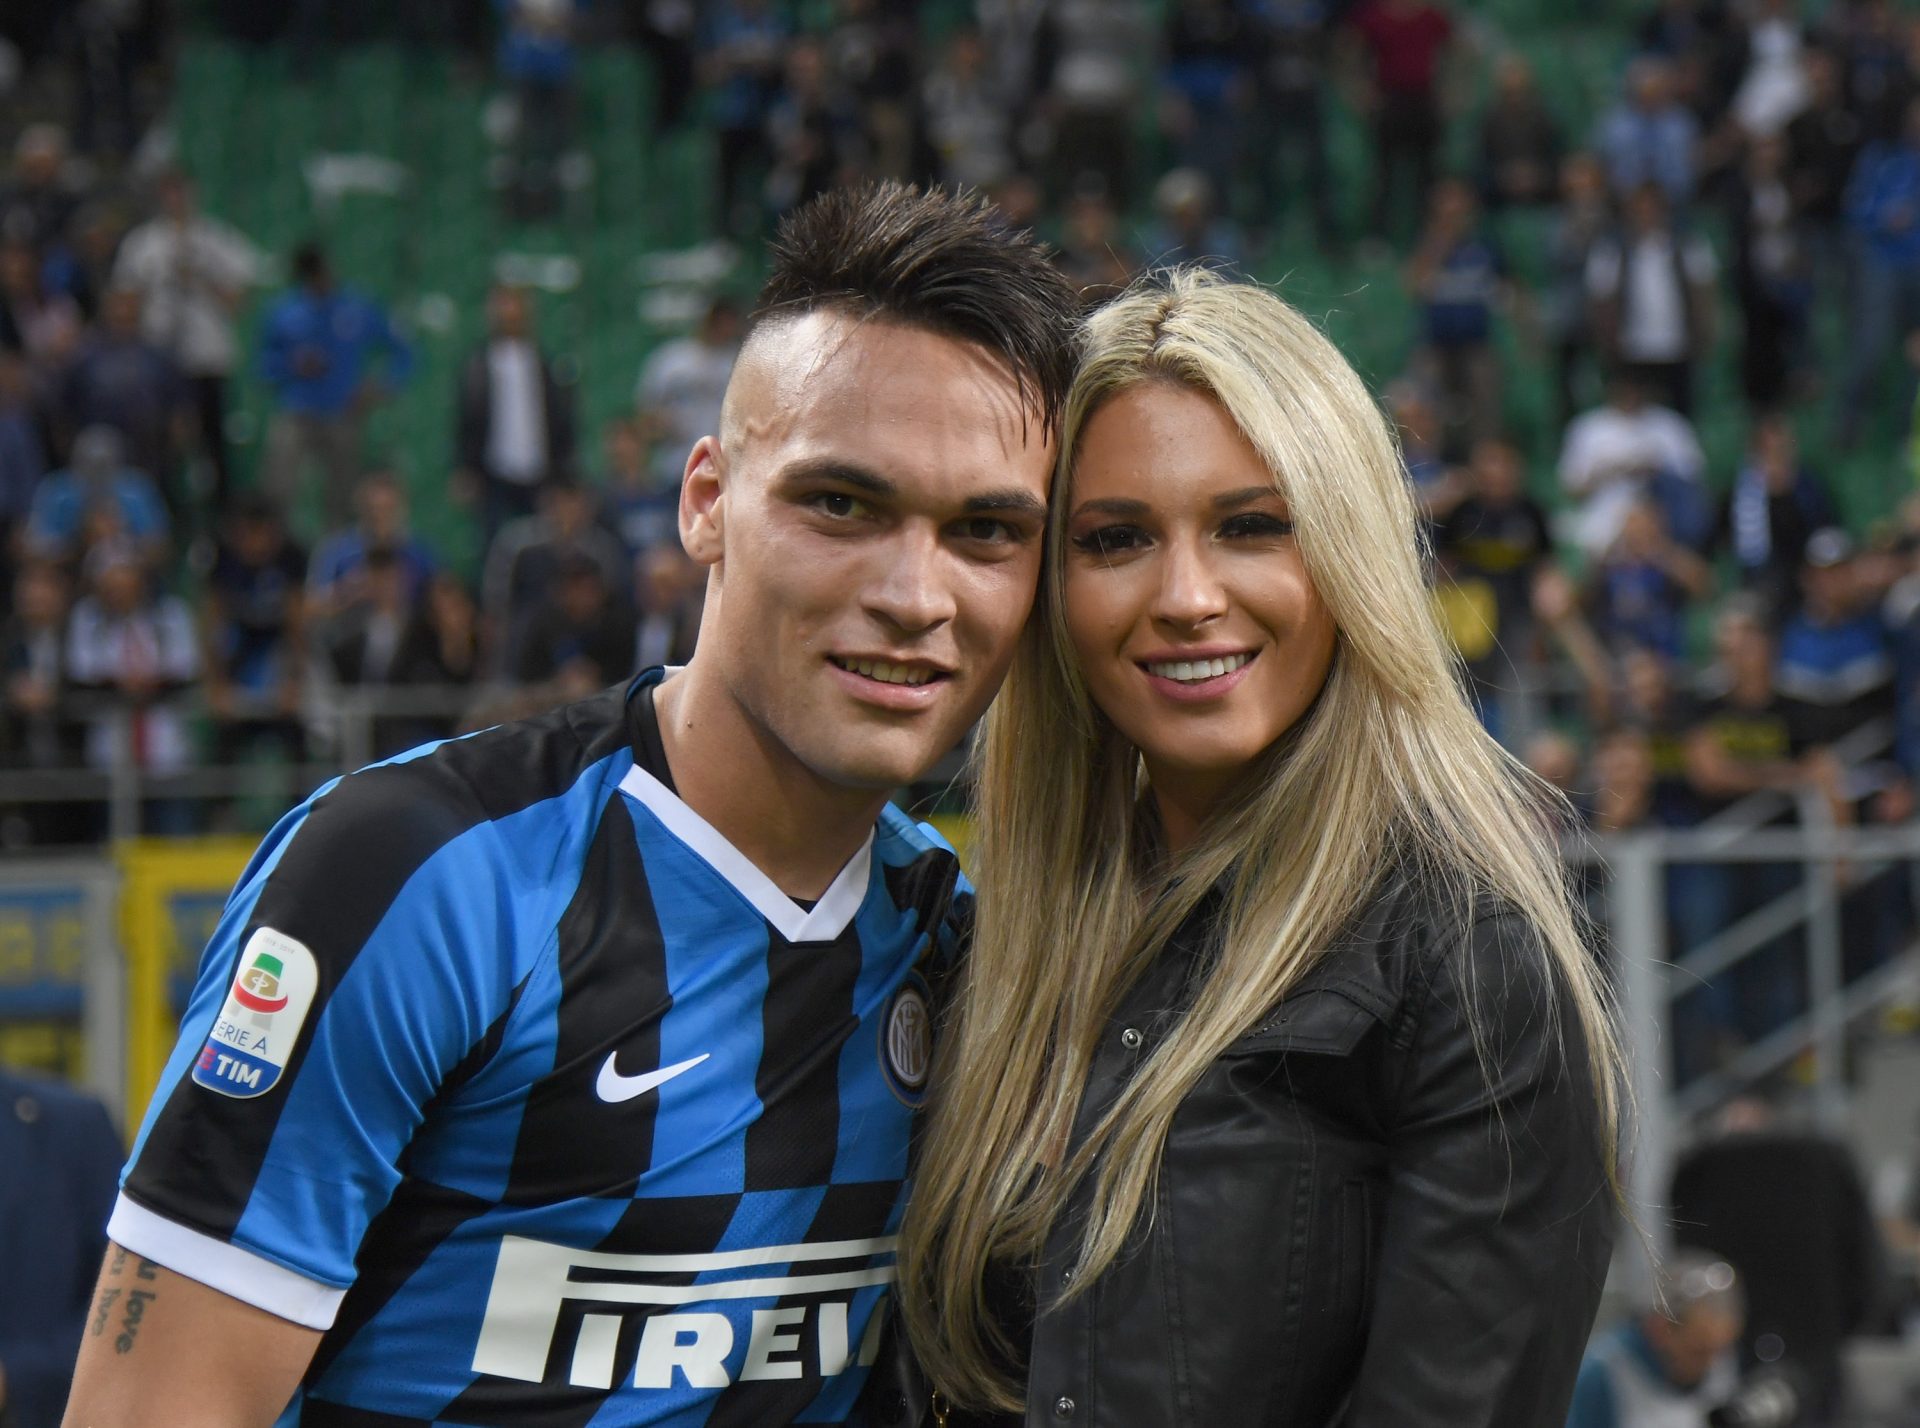 Agustina Gandolfo and Lautaro Martinez
Photo: Photo by Claudio Villa - Inter/FC Internazionale via Getty Images